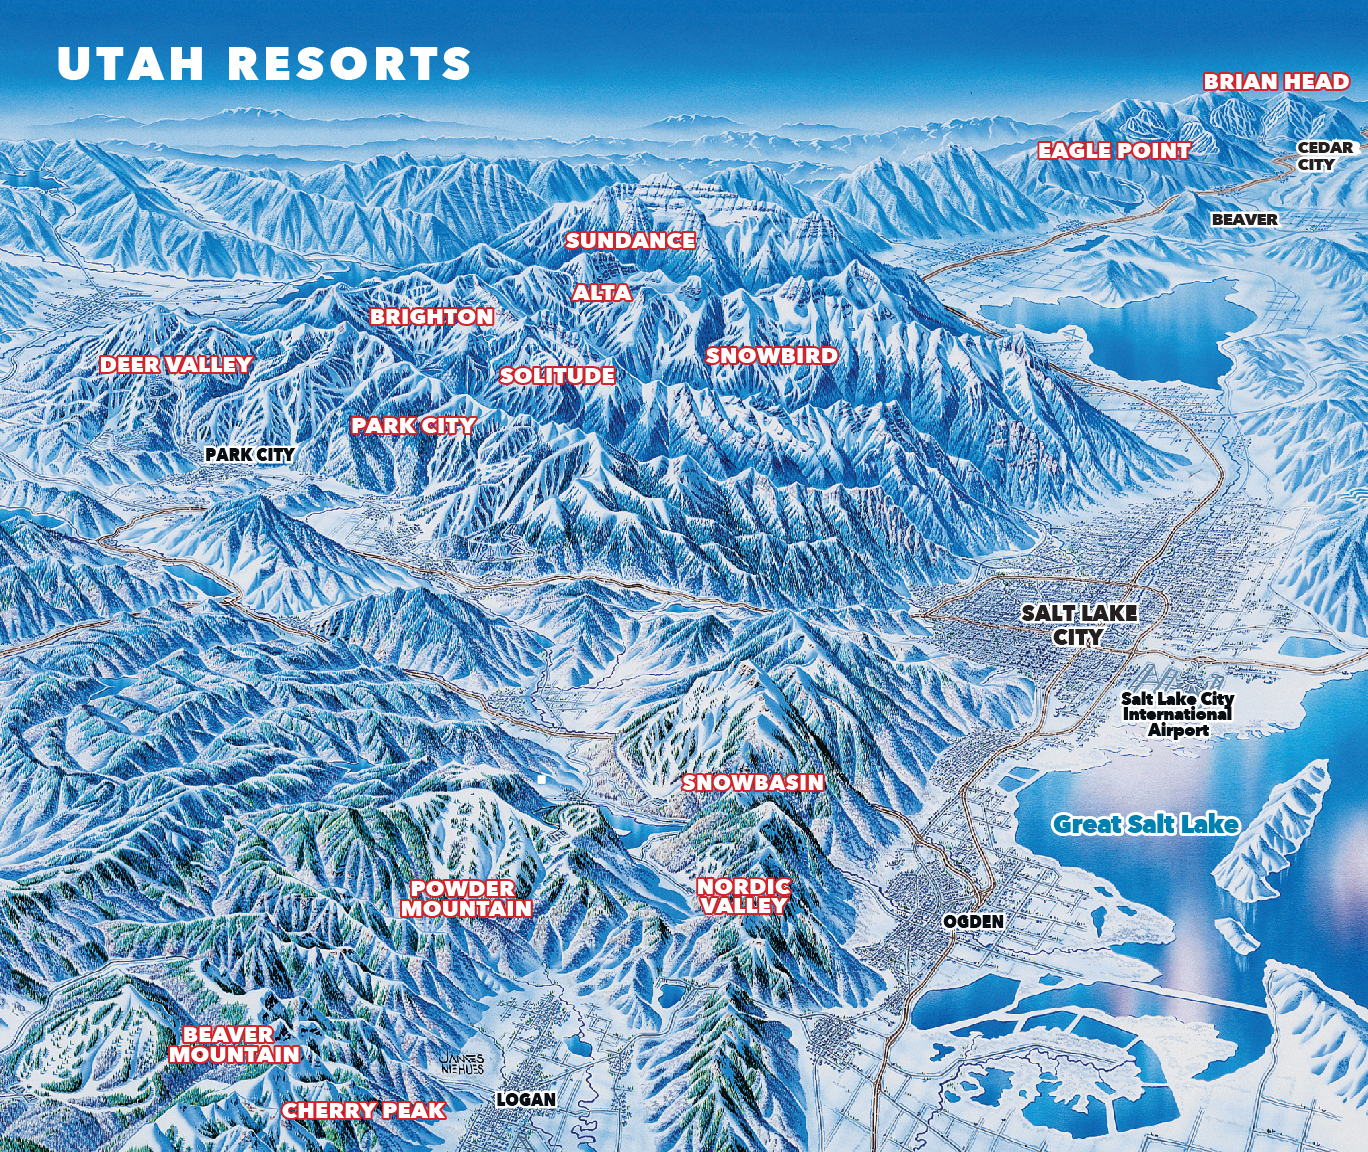 US Nummernschild Utah original S1635 Ski Greatest Snow on Earth 